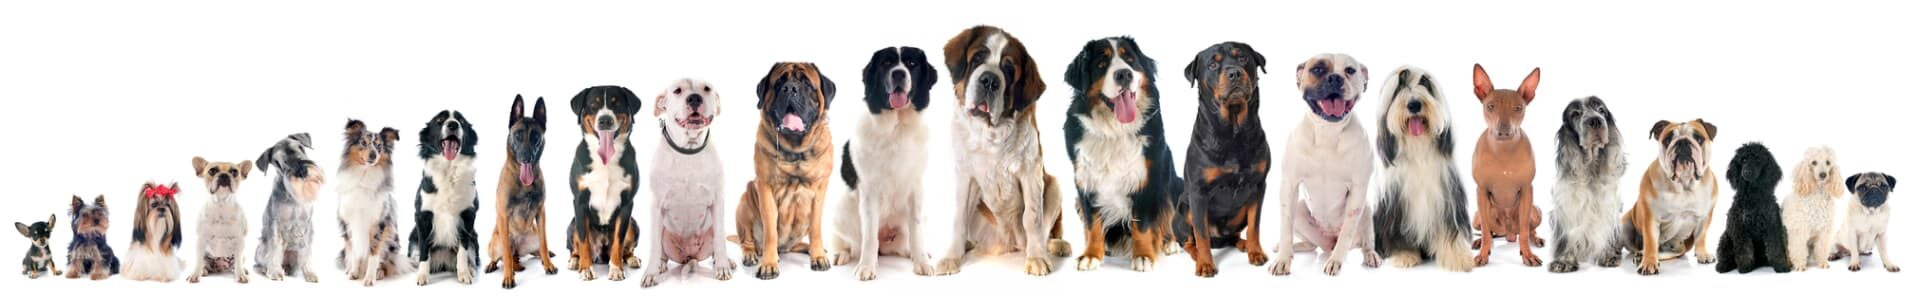 Dog House Size Formula - Custom Dog Houses for All Sized Dogs